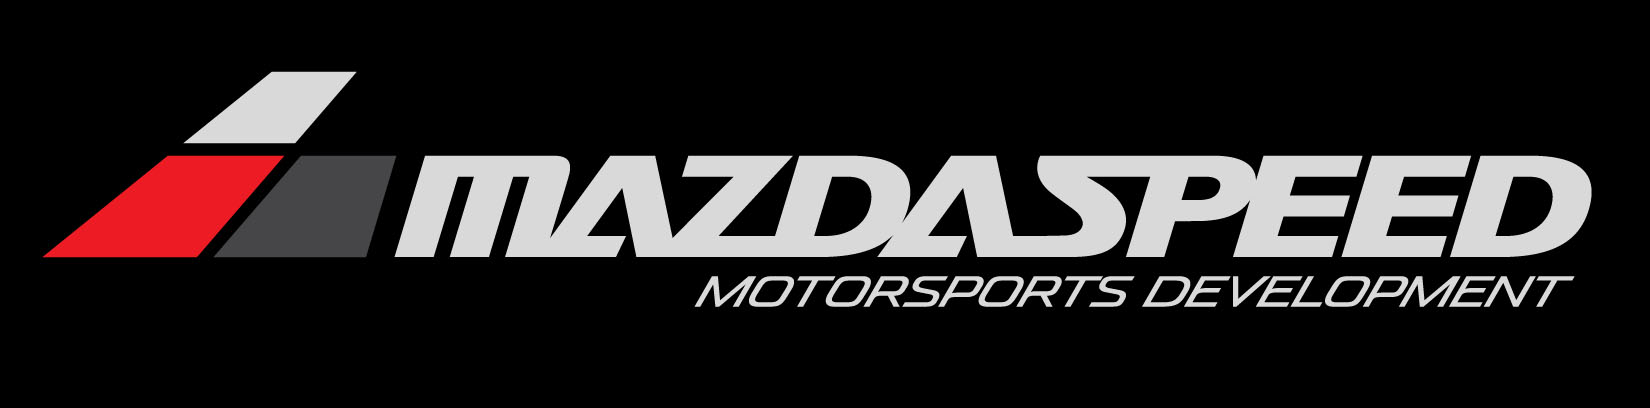 MazdaSpeed.jpg